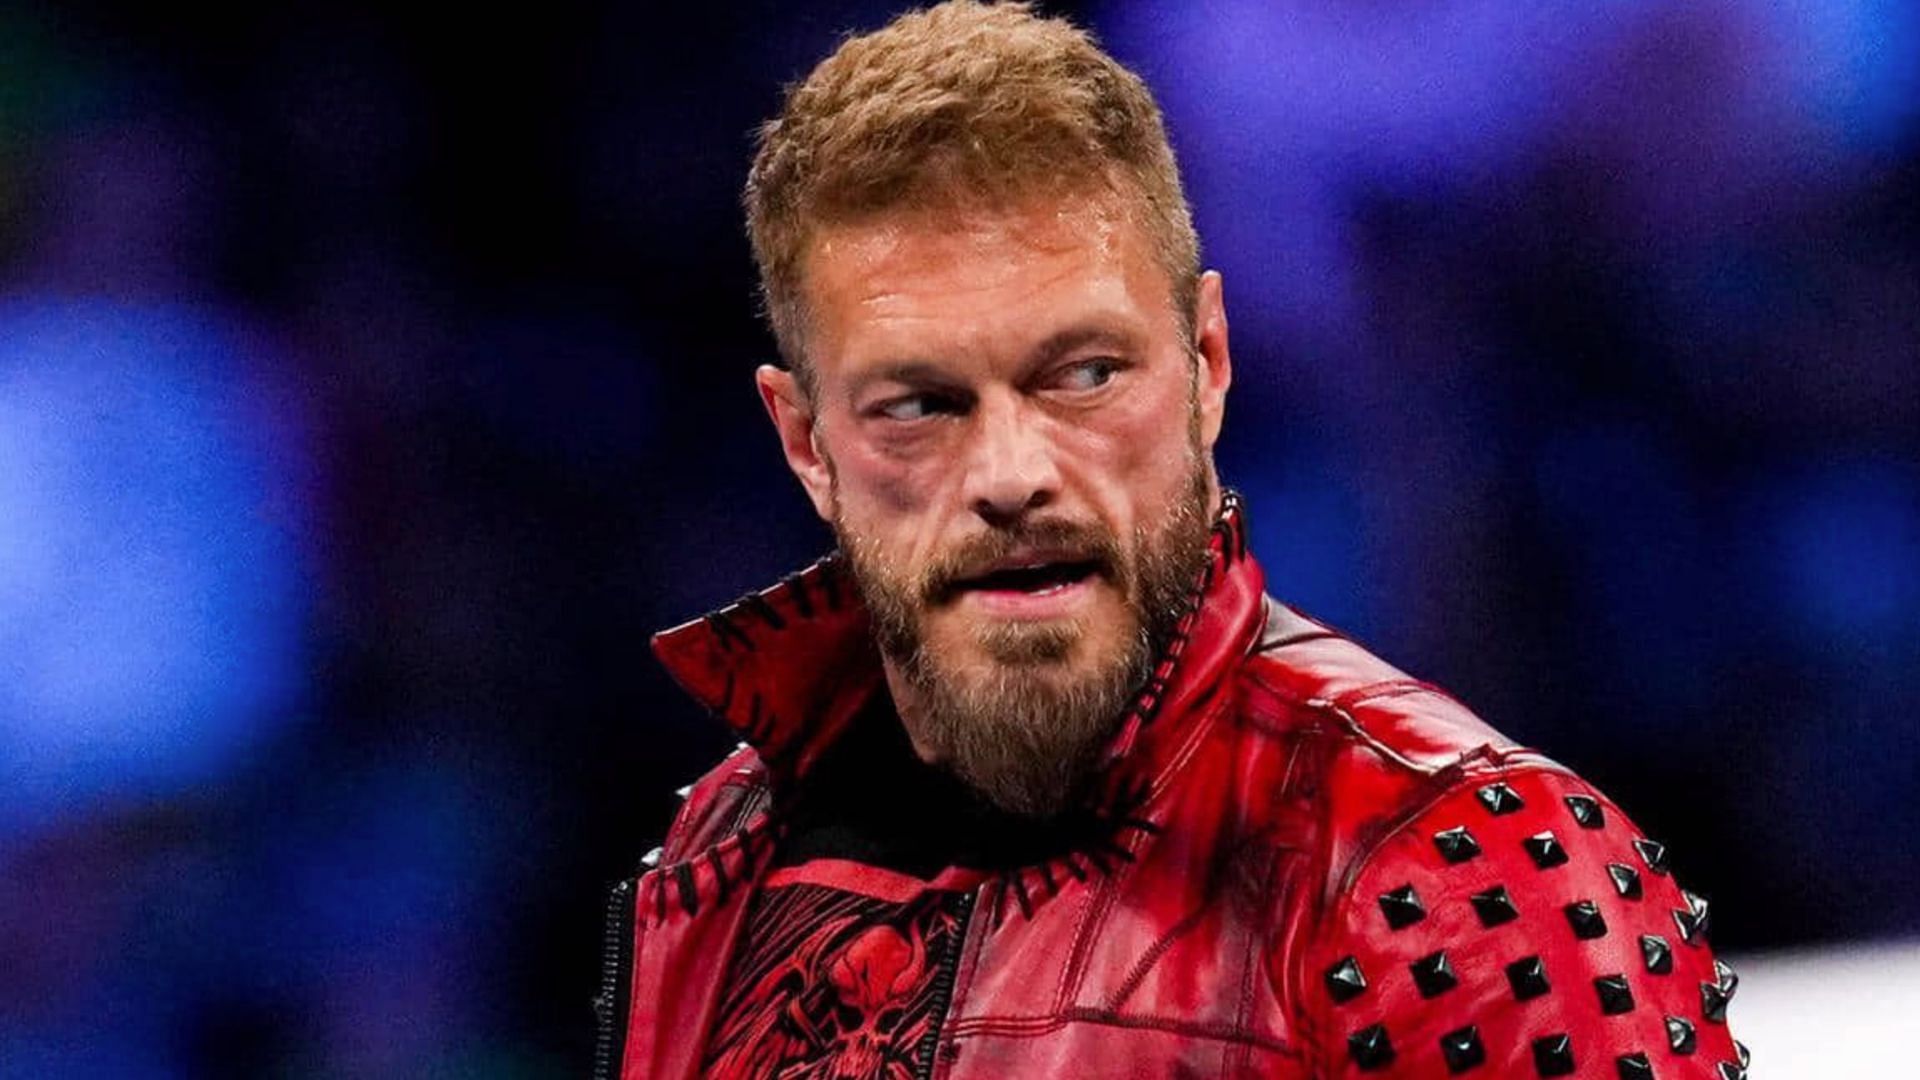 Edge will battle Damian Priest next week on WWE RAW